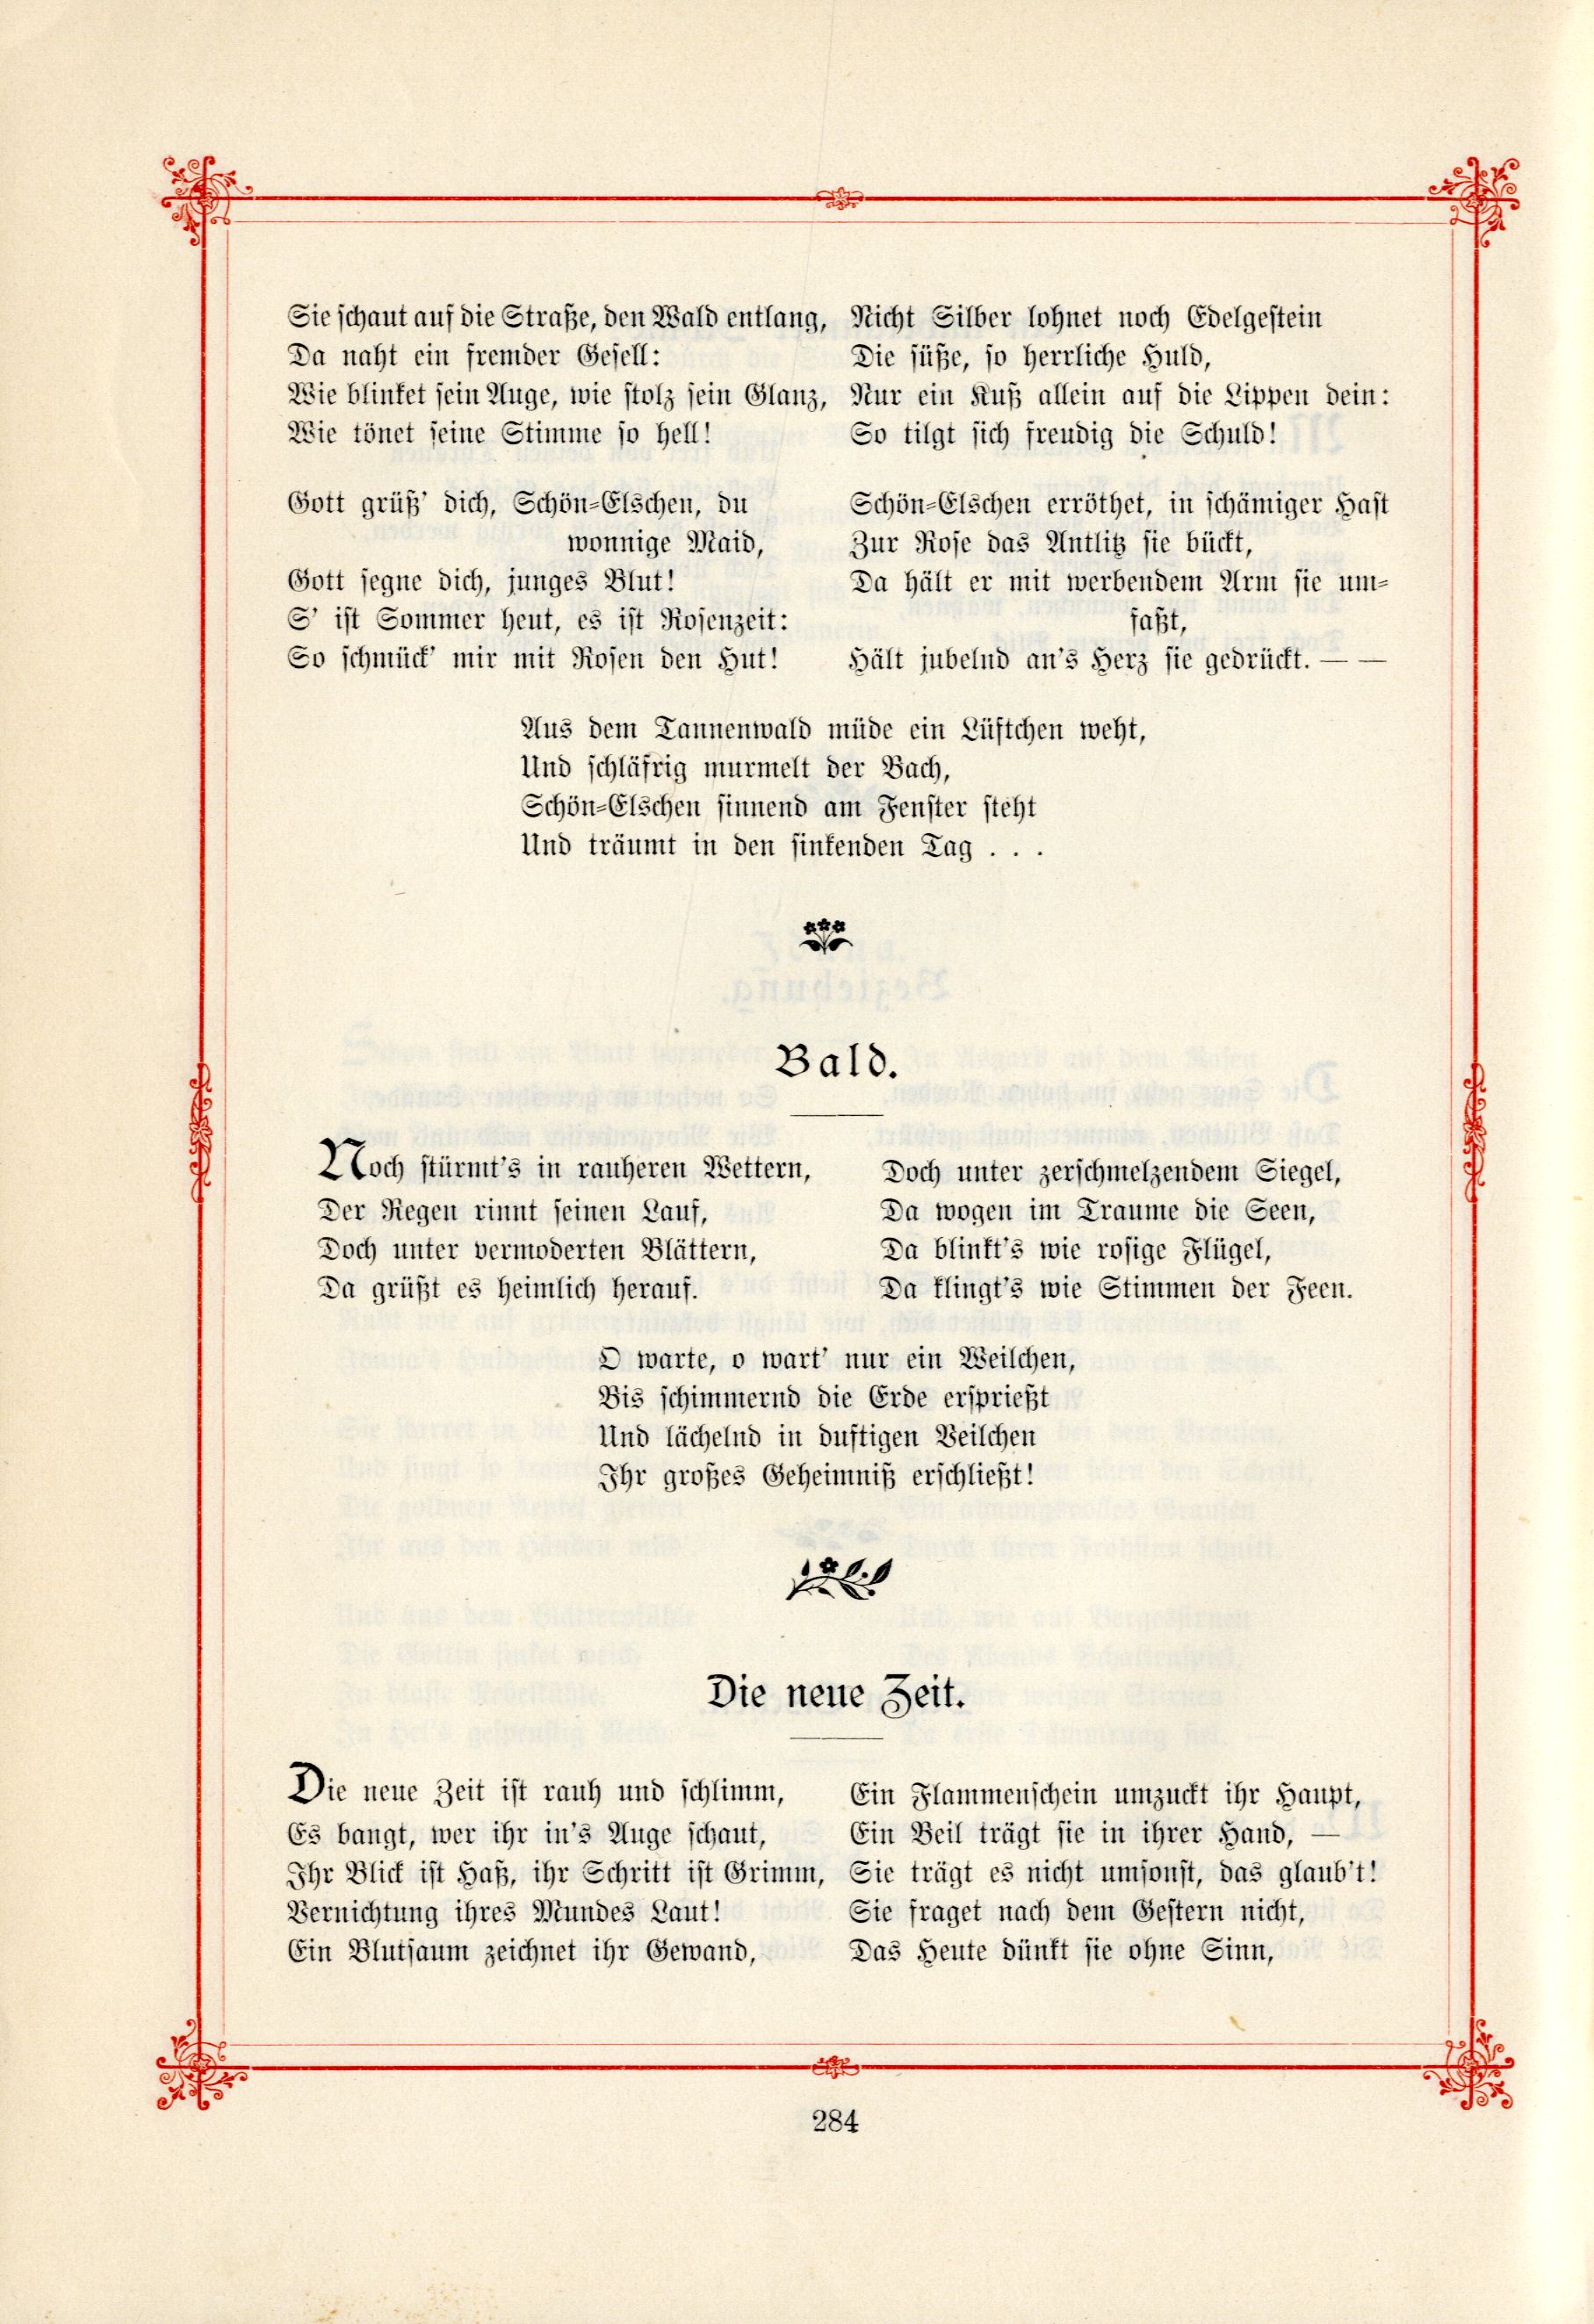 Bald (1895) | 1. (284) Main body of text